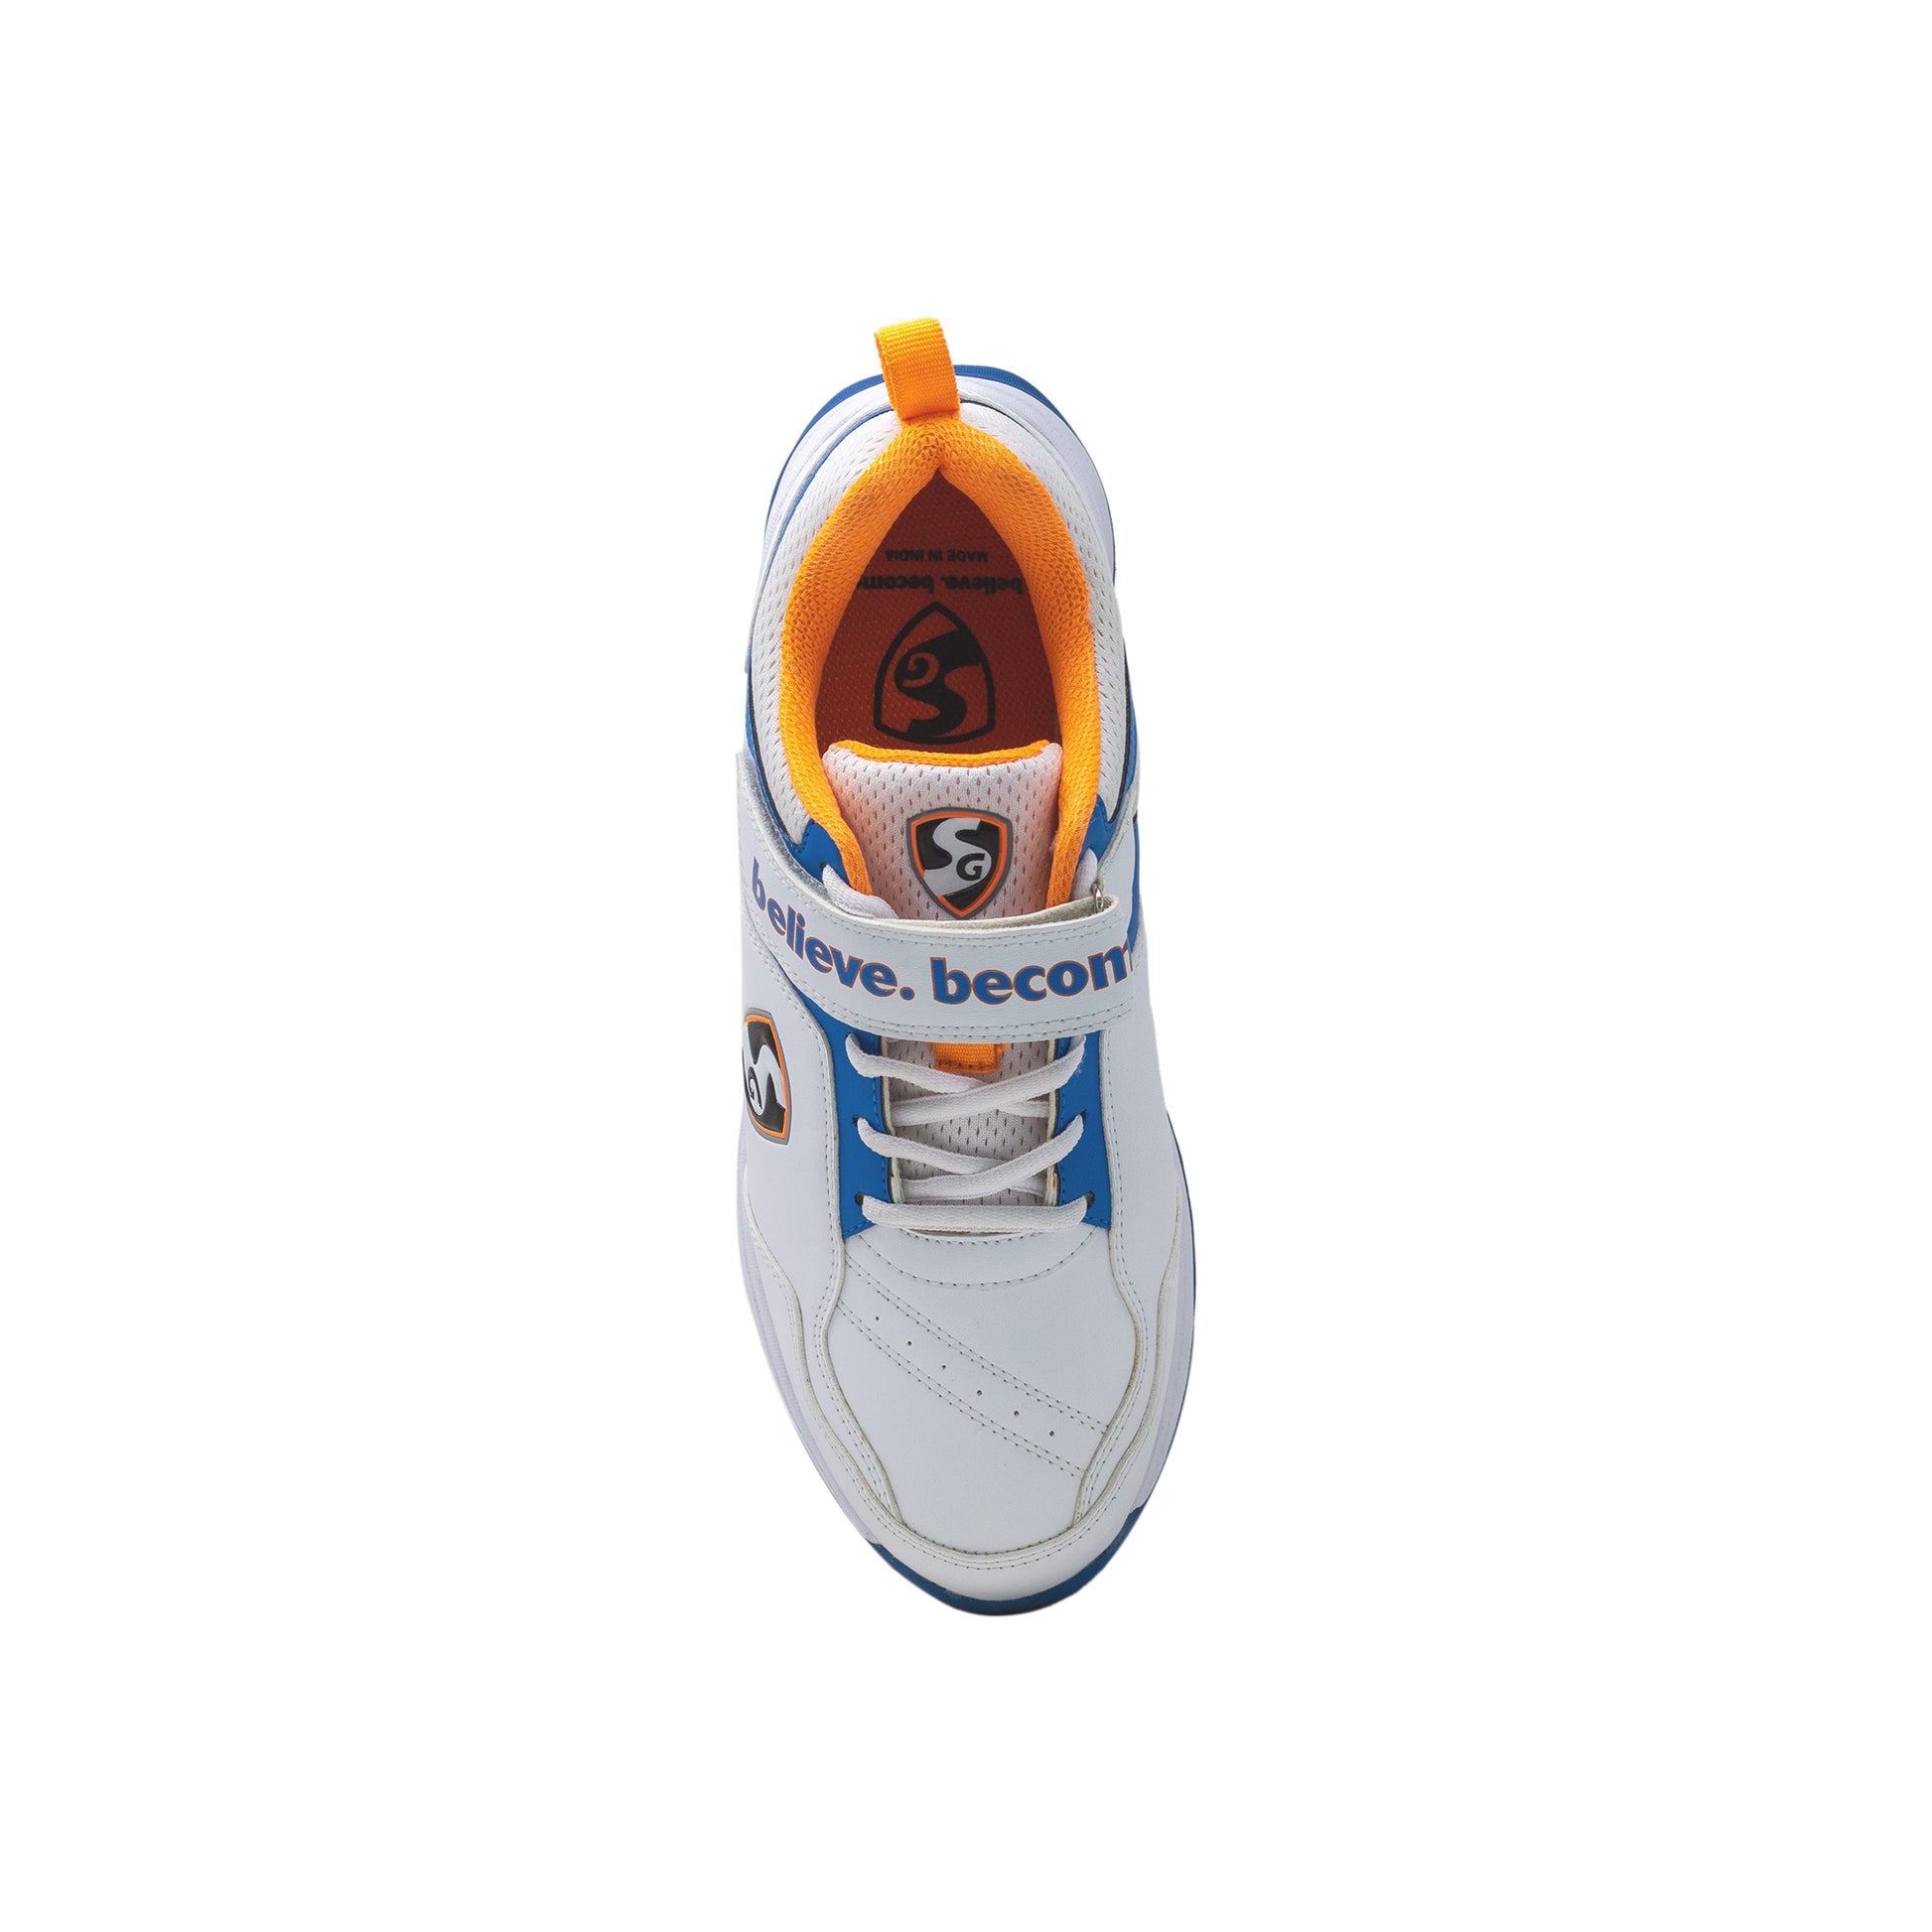 SG CENTURY 6.0 Cricket - Sleek Design in White/Royal Blue/Orange for Optimal Performance